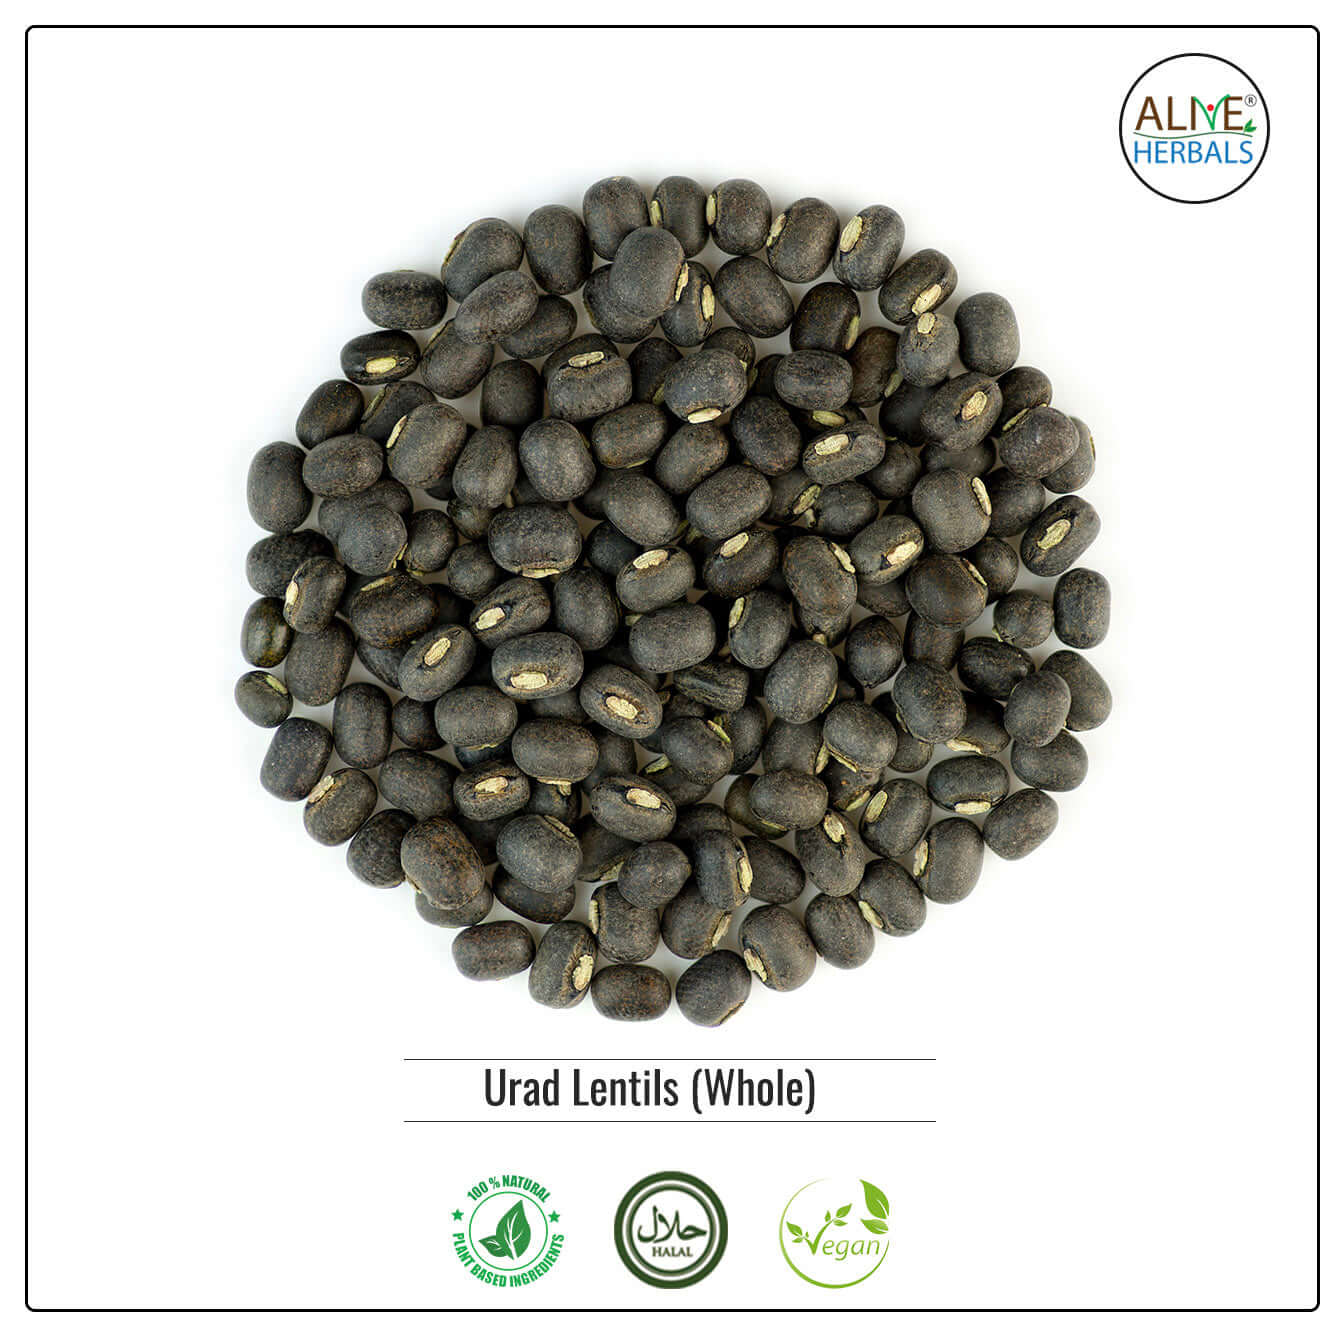 Urad Lentils (Whole) - Shop at Natural Food Store | Alive Herbals.